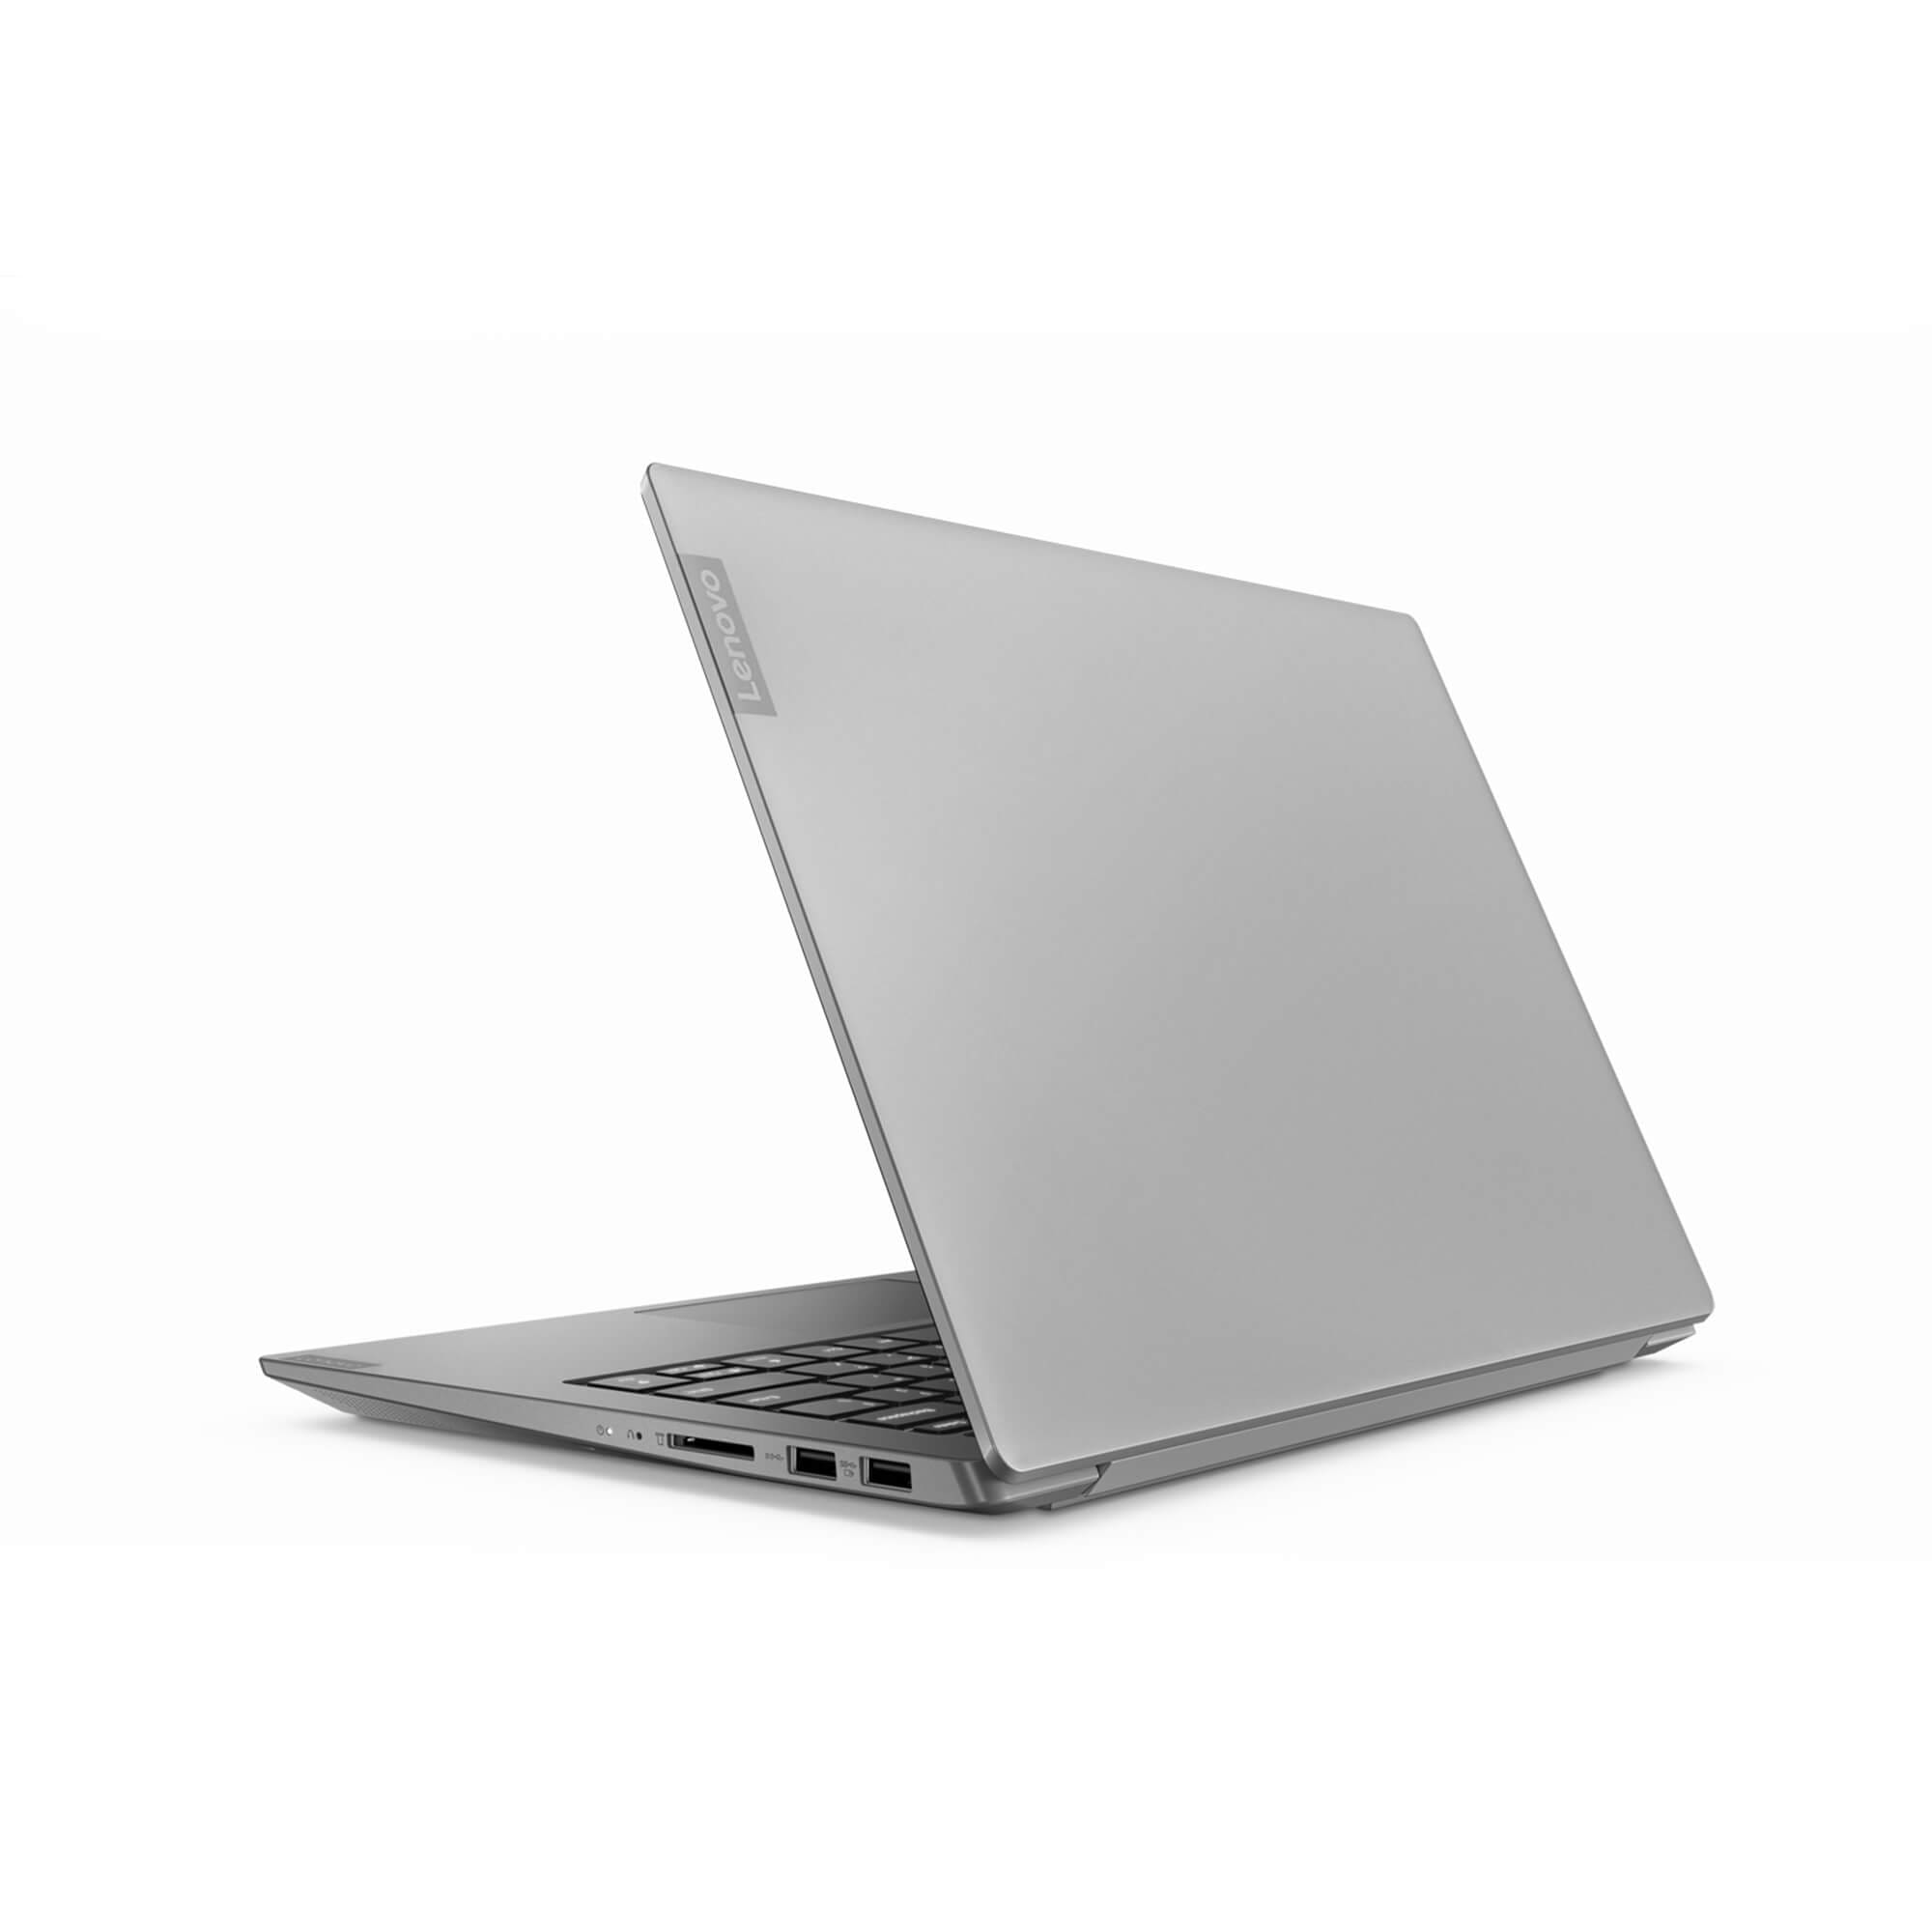 Lenovo IdeaPad S340 Touch Laptop, 15.6" FHD IPS  250 nits, i5-8265U,   UHD Graphics 620, 8GB, 256GB SSD - image 4 of 5